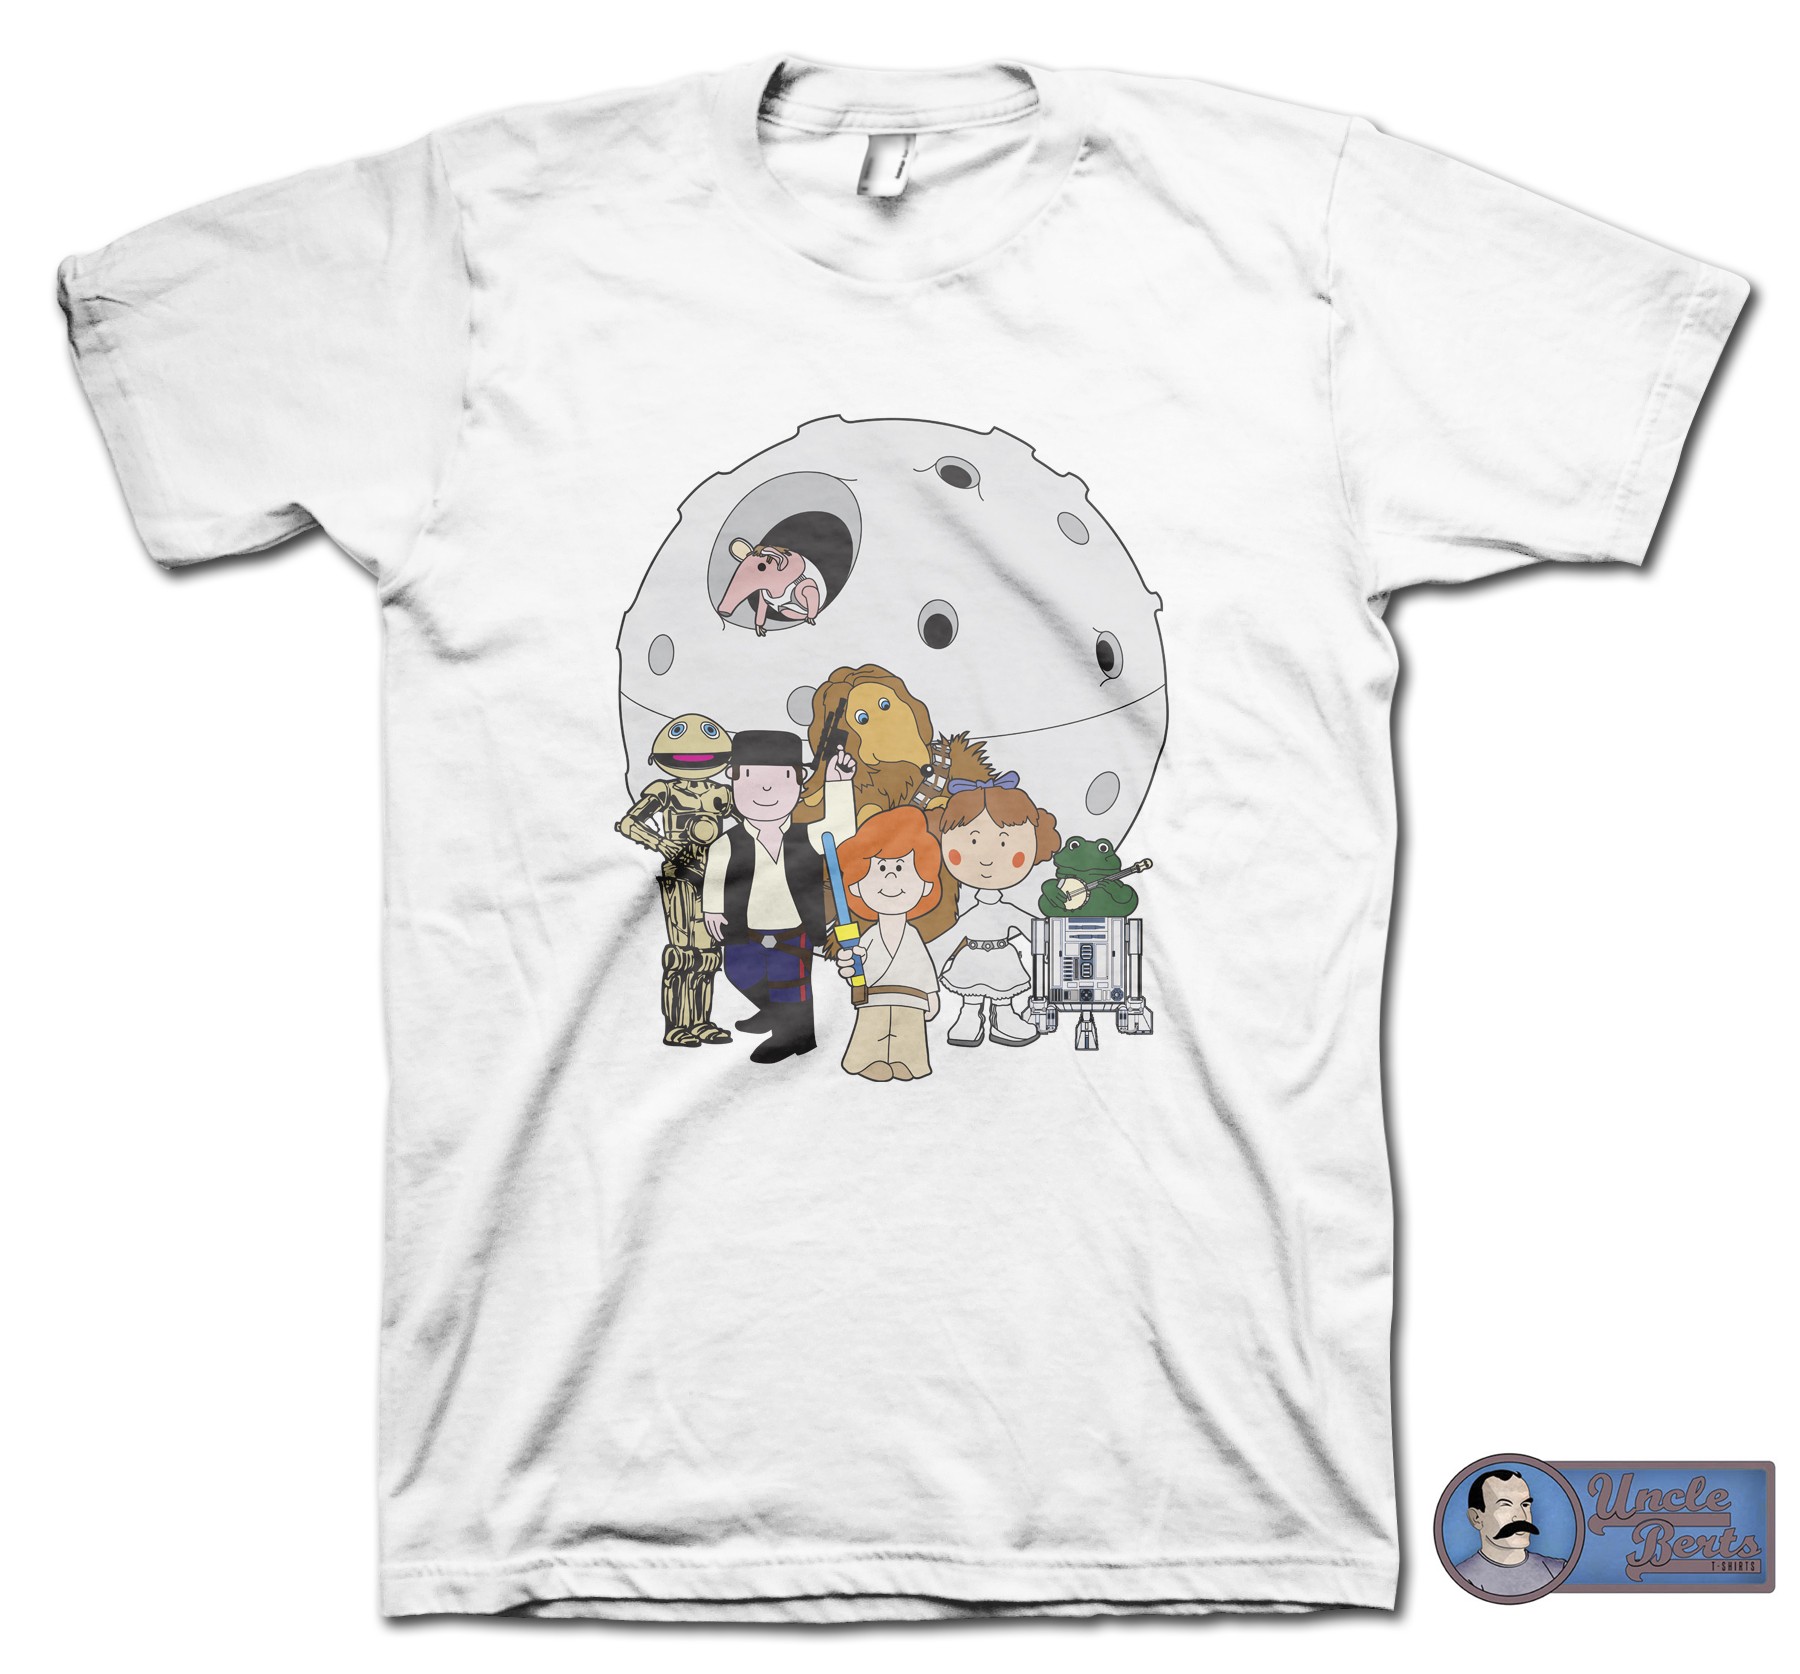 Star Wars 70's Cartoon inspired T-Shirt